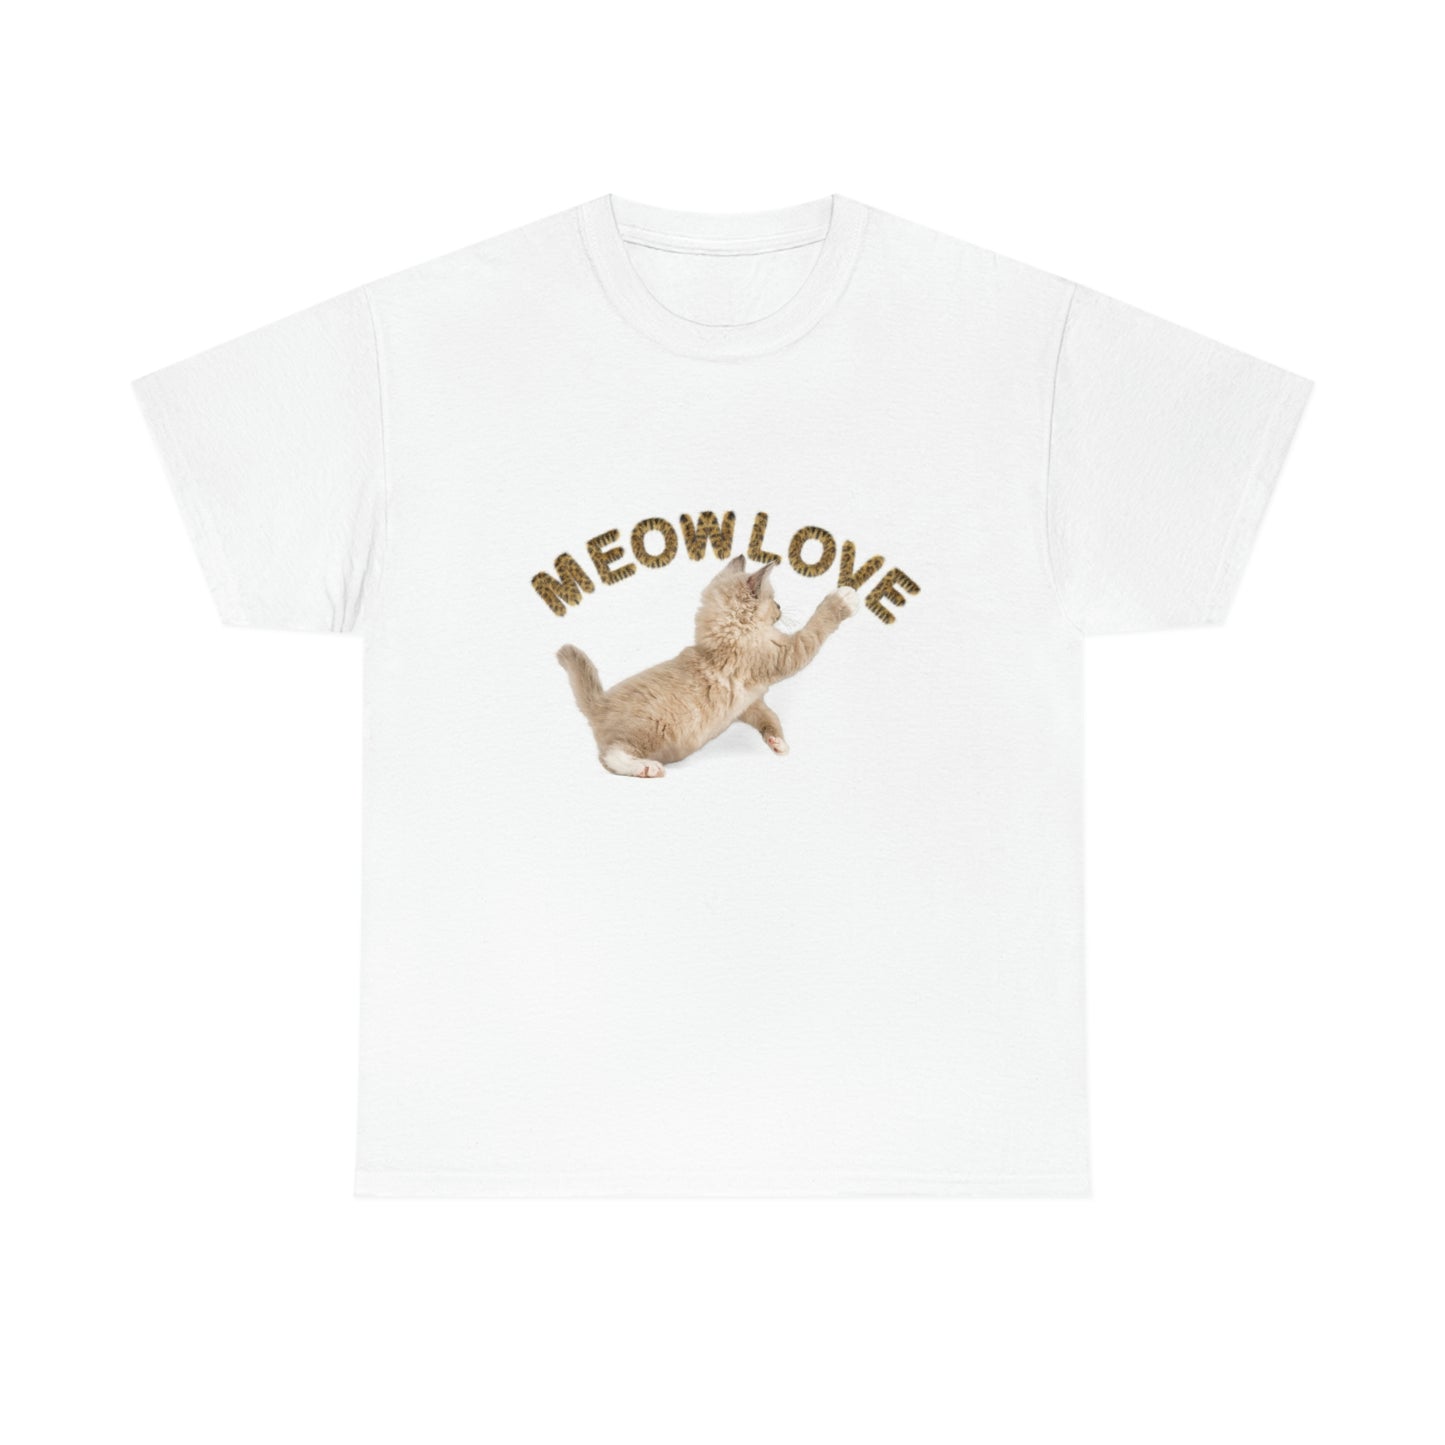 Meow Love Kitten (Cat) Playing design Graphic tee shirt